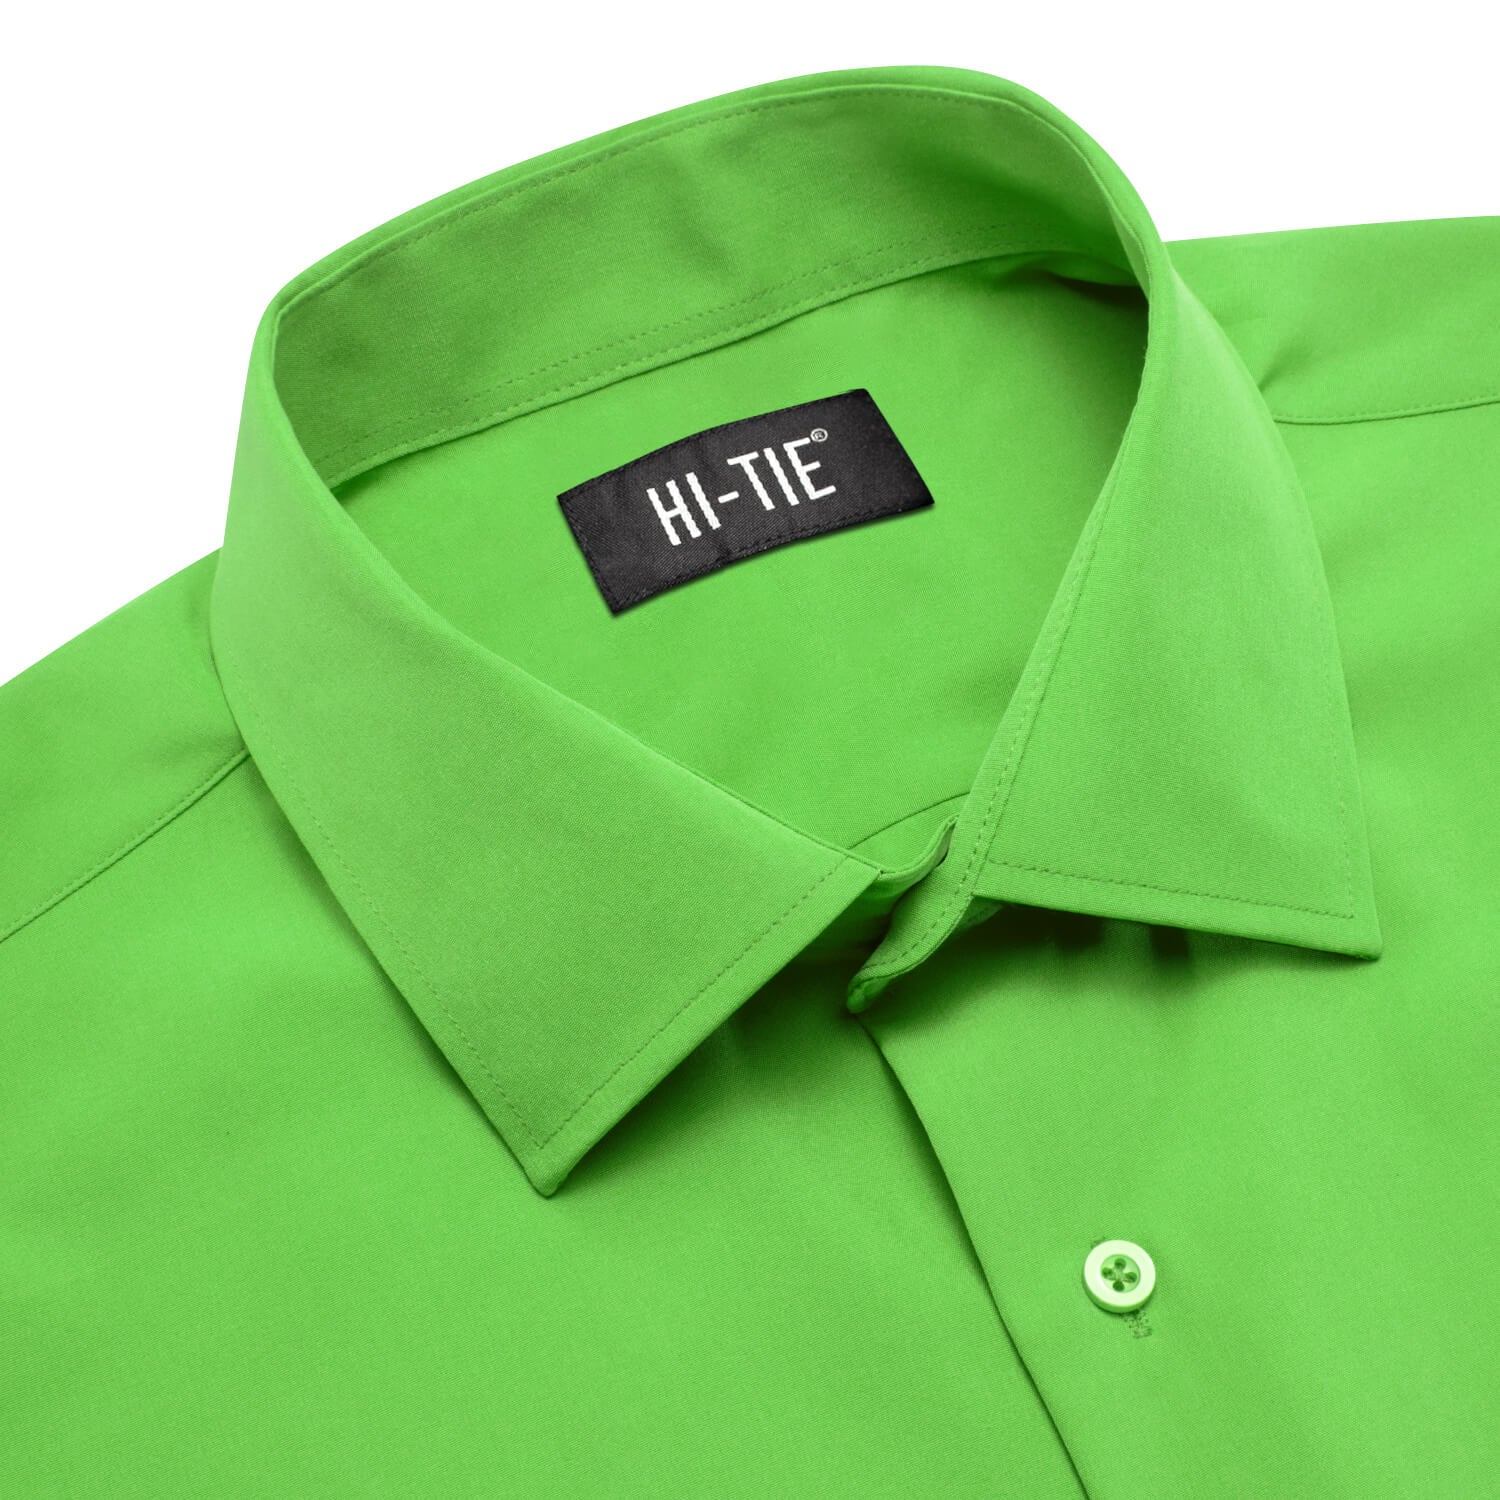 Hi-Tie Long Sleeve Shirt Green Solid Casual Men's Dress Shirt Top Wear